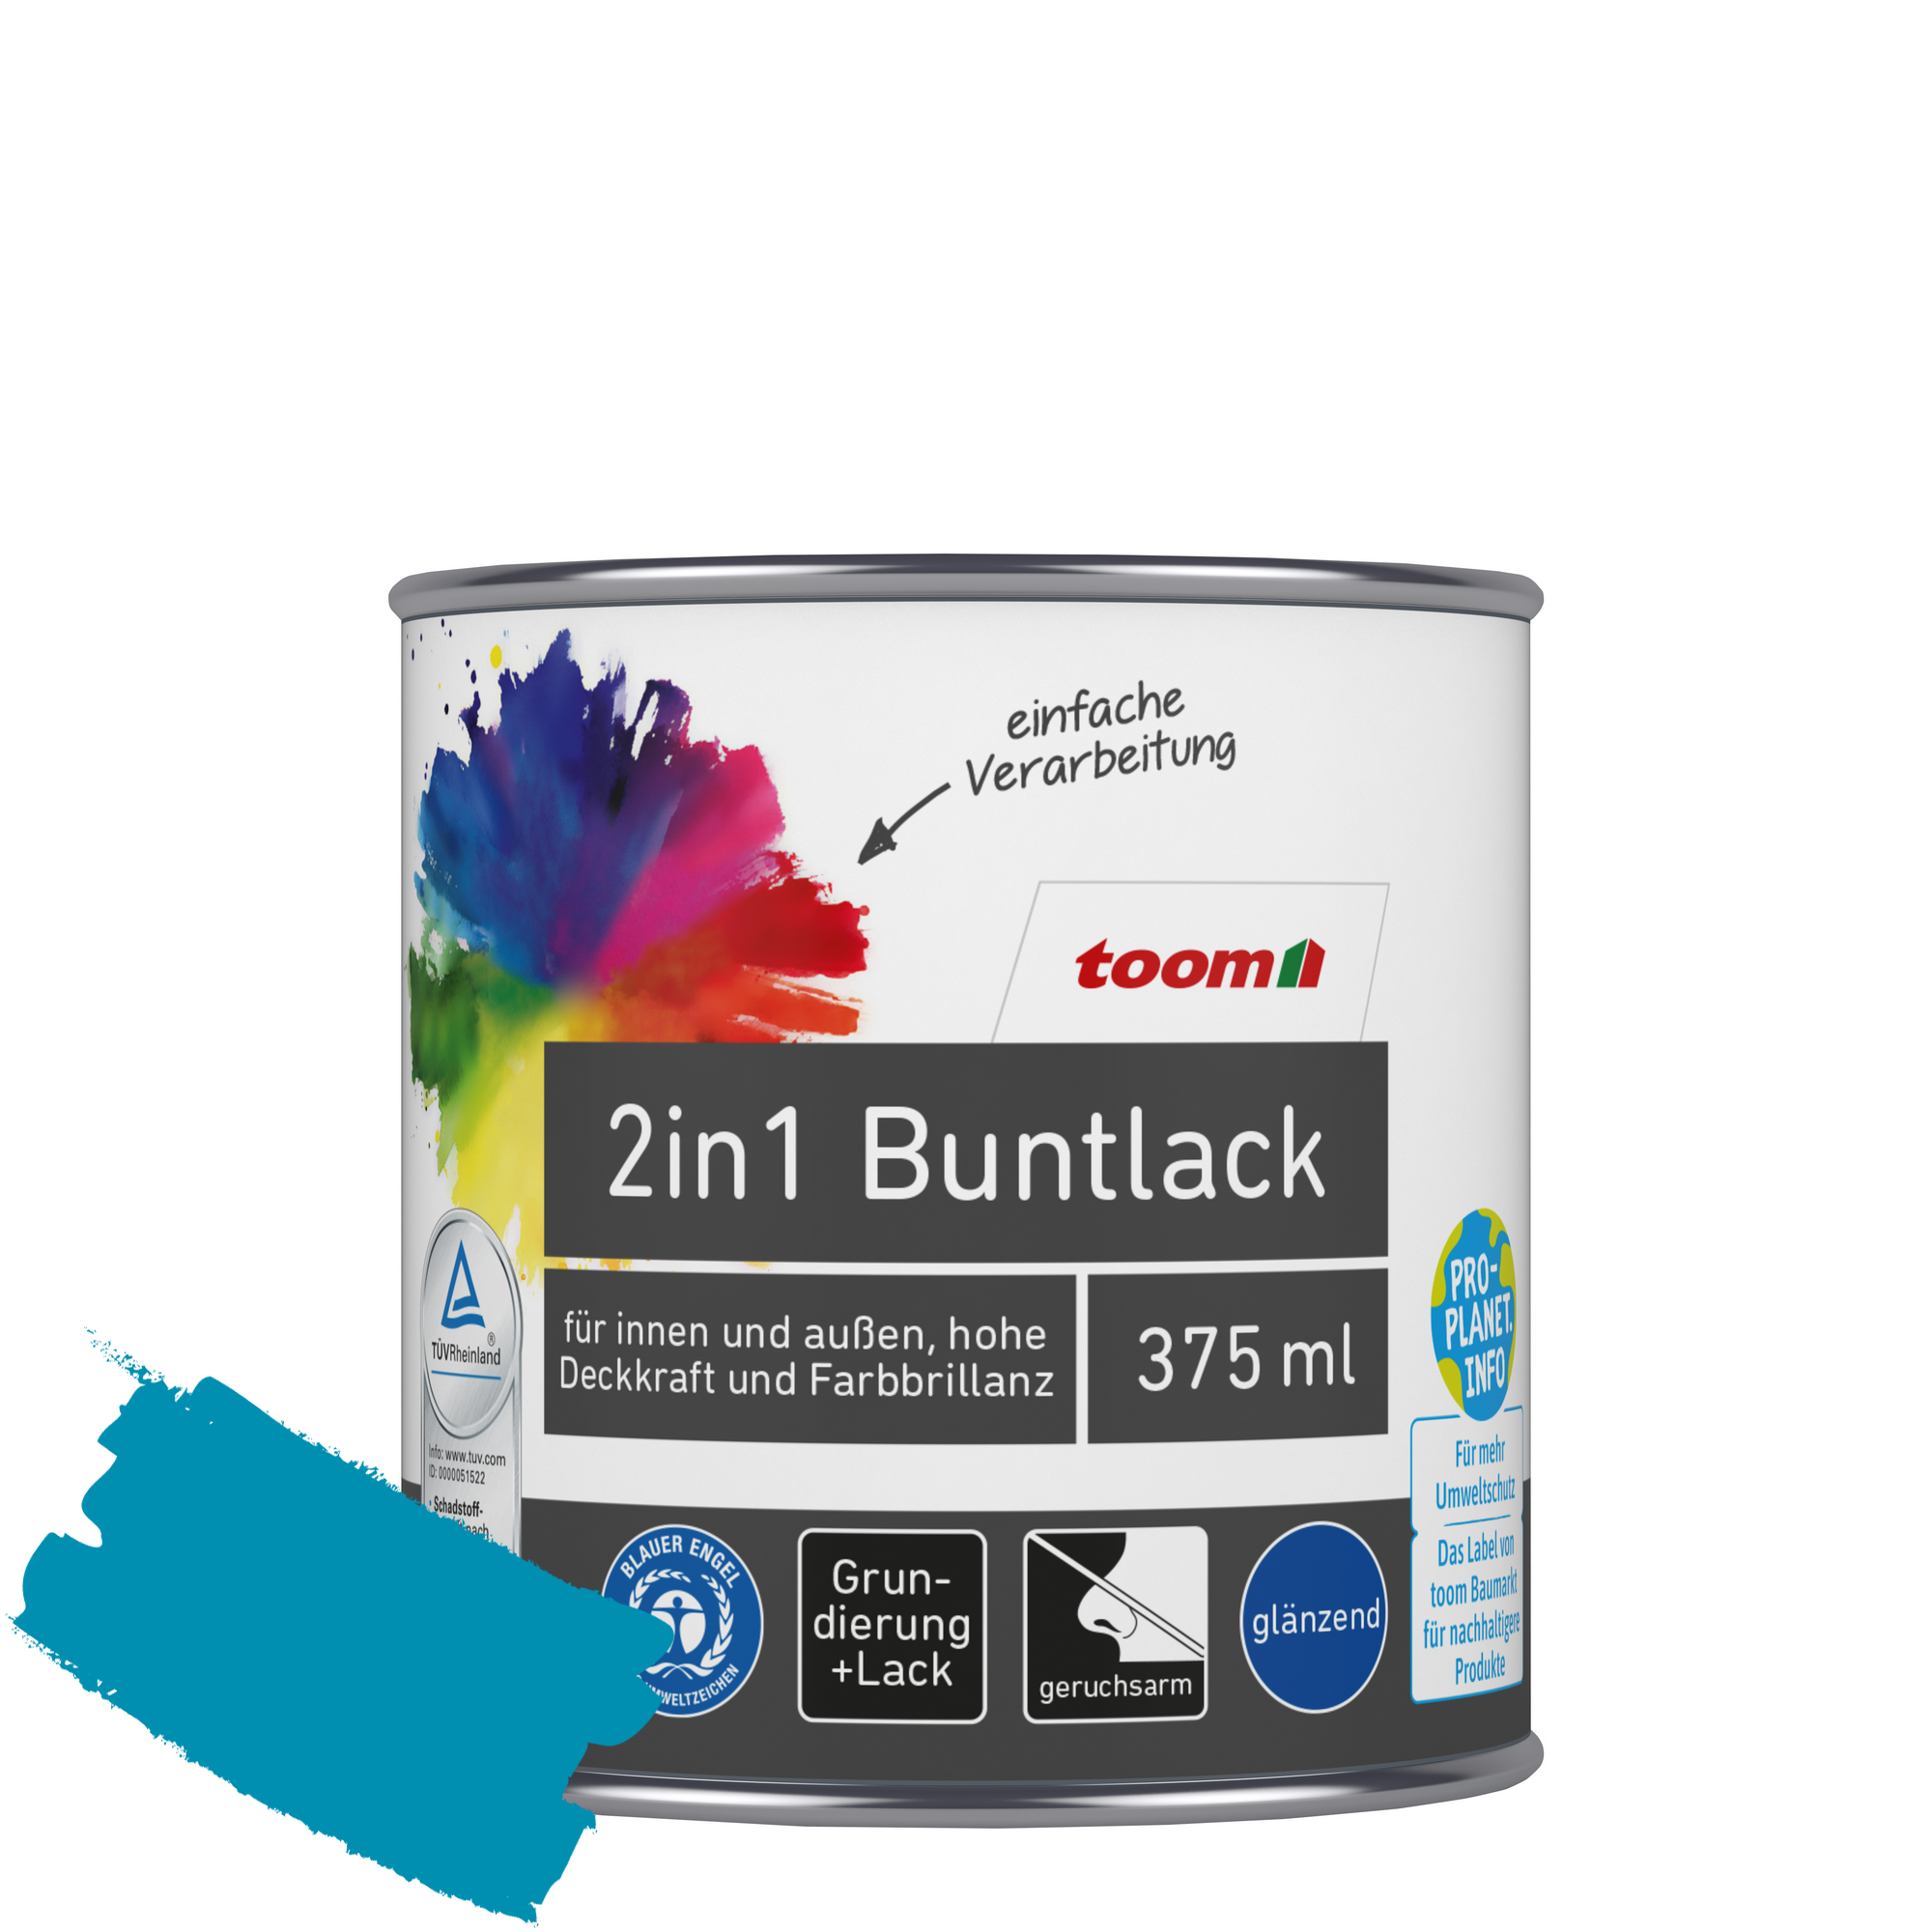 2in1 Buntlack 'Aquamarine' lichtblau glänzend 375 ml + product picture